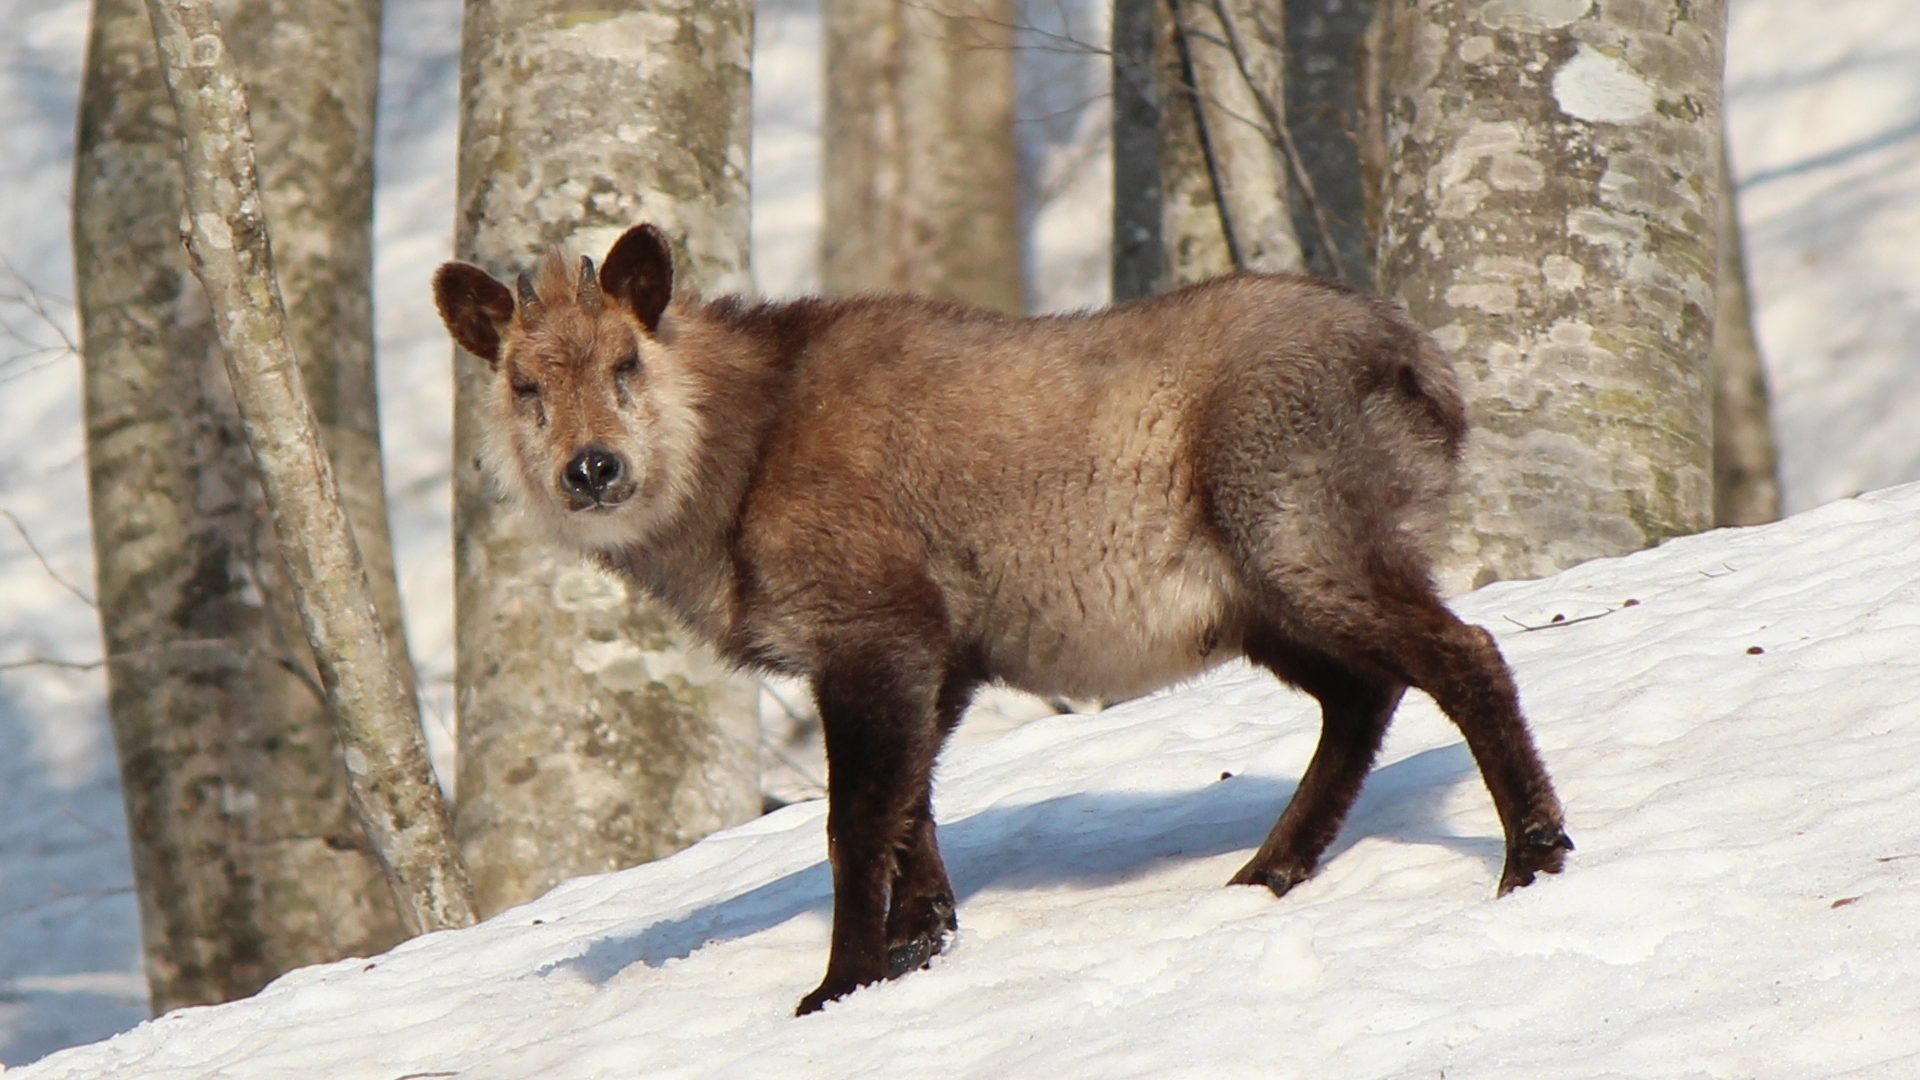 large deer-like animal standing in the snow